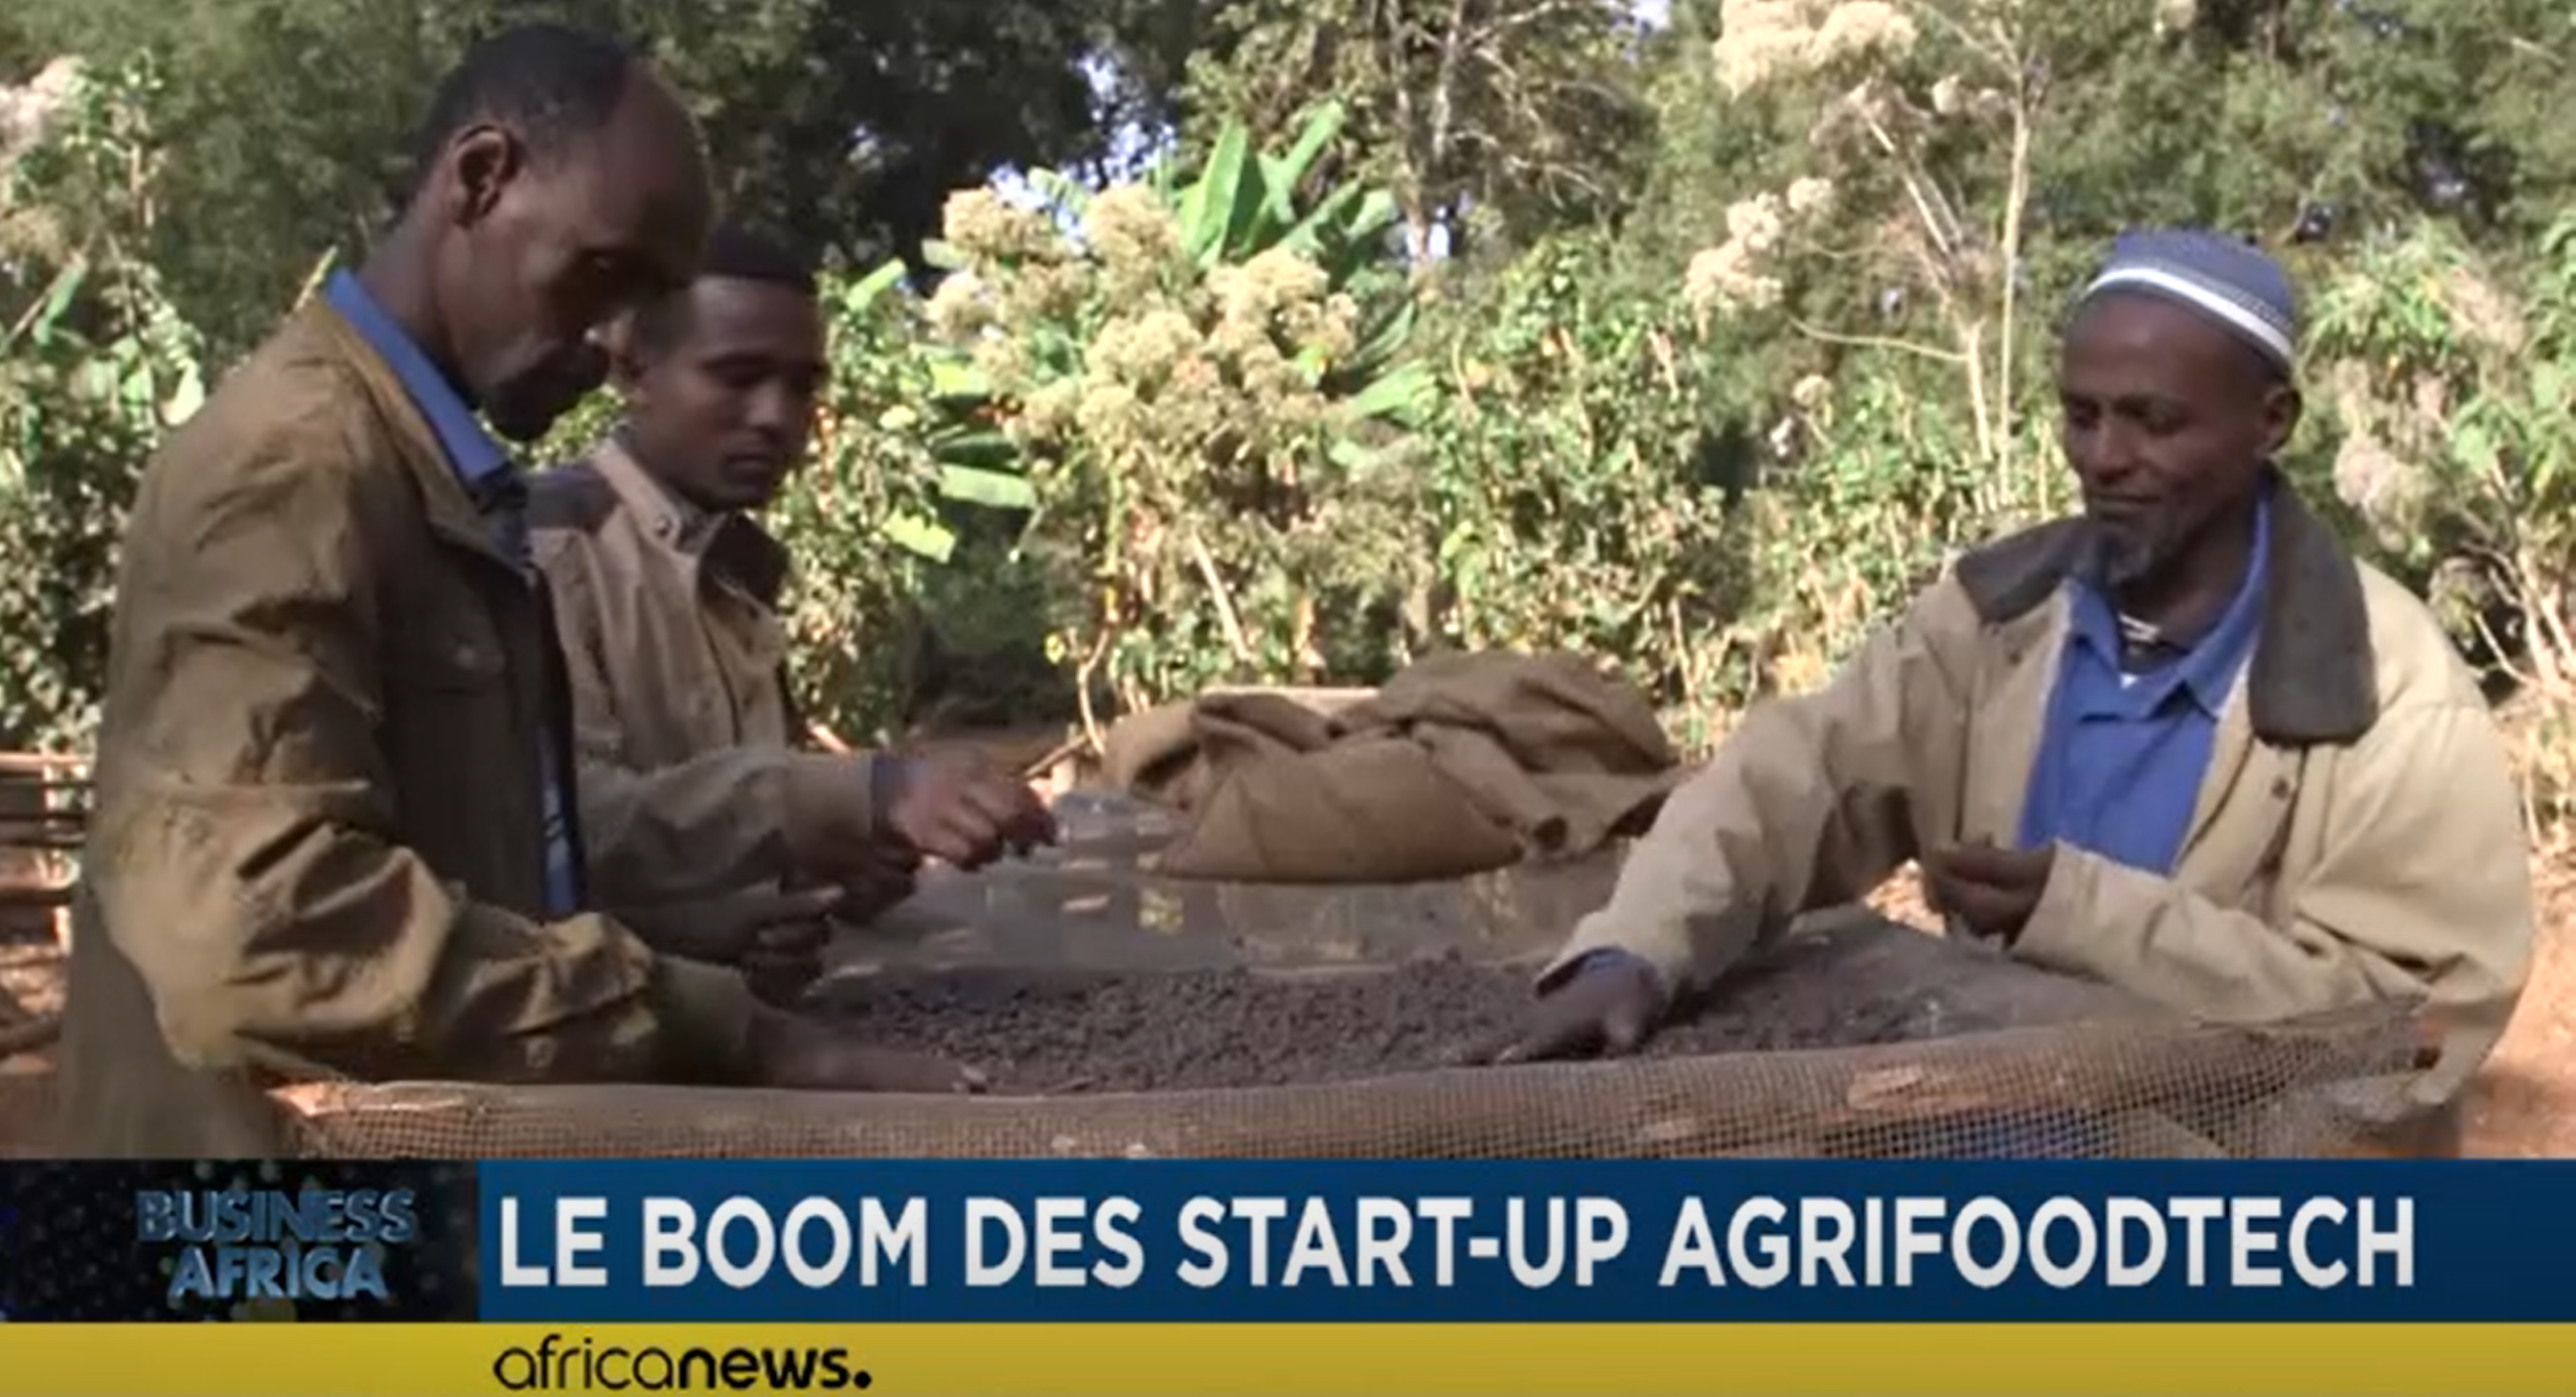 Le boom des start-up agrifoodtech